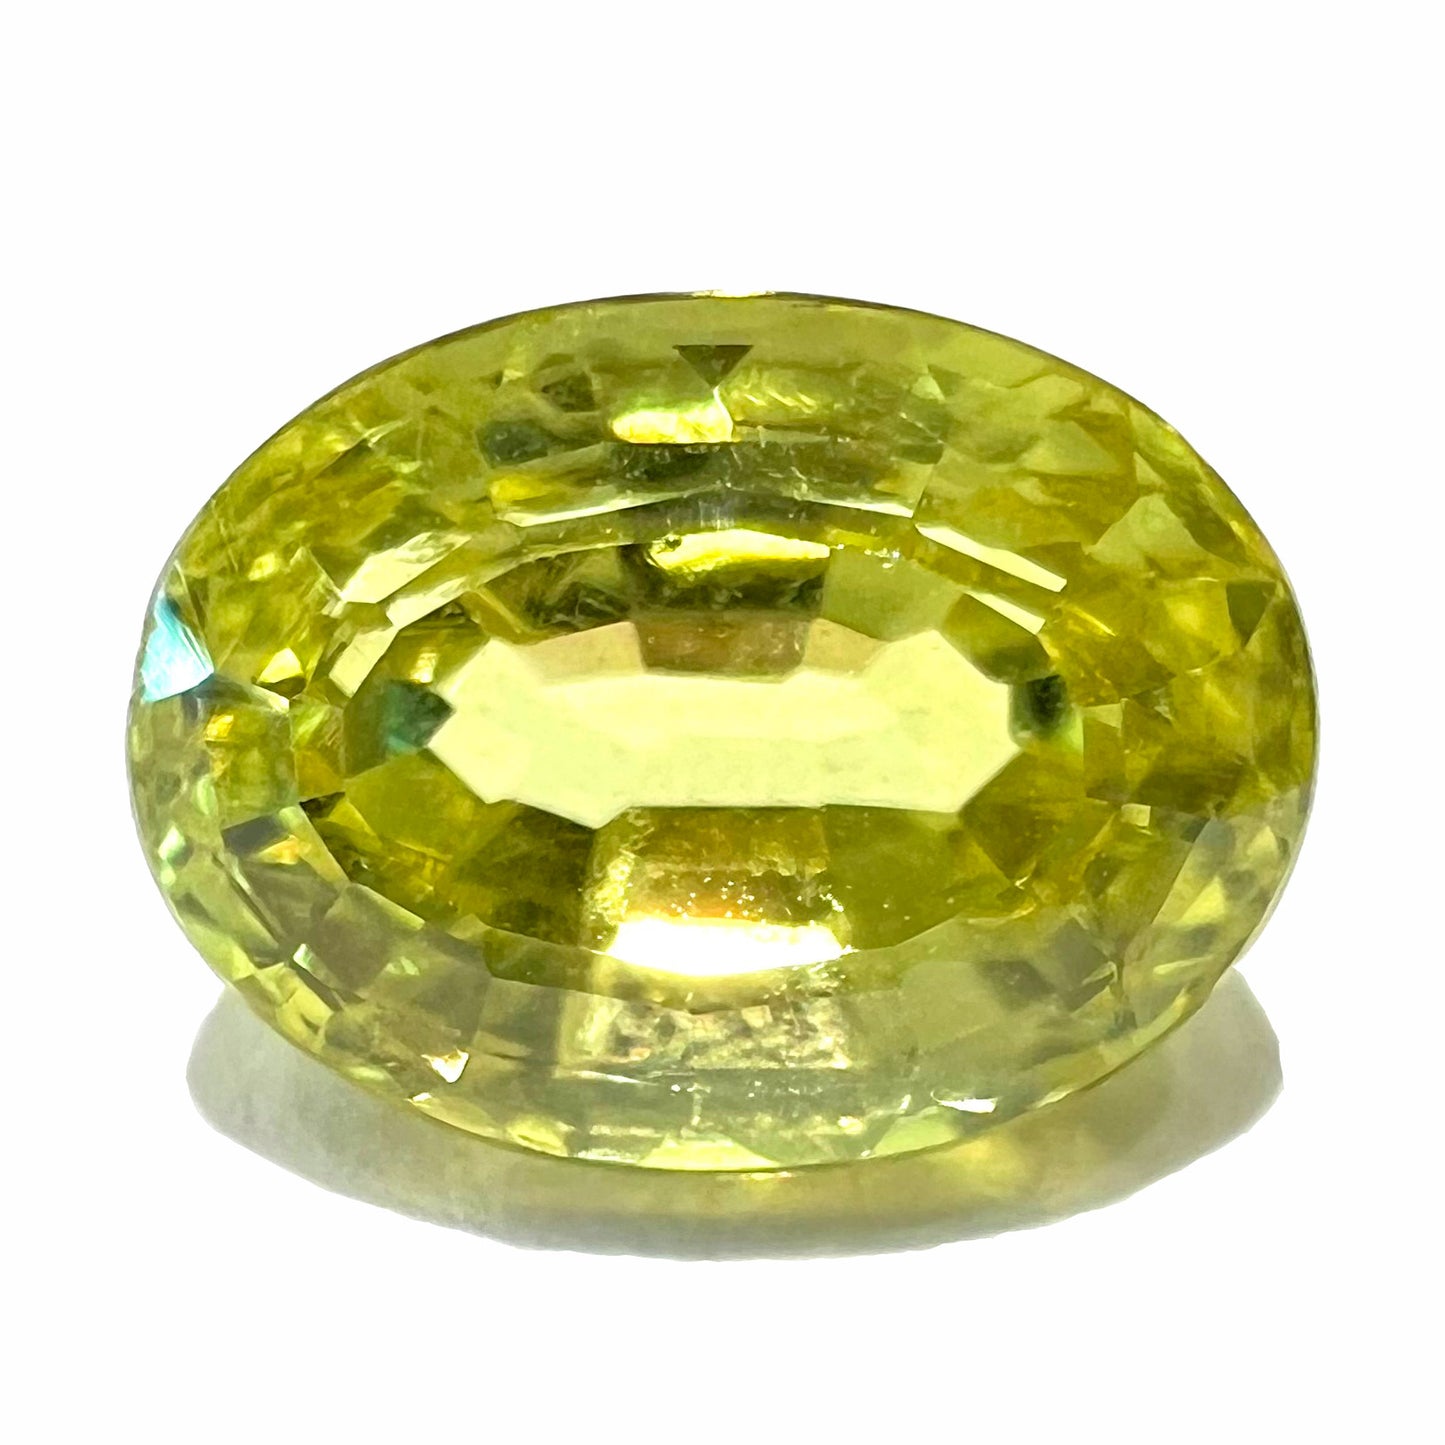 A loose, oval cut greenish yellow chrysoberyl stone.  The chrysoberyl weighs 4.38 carats.